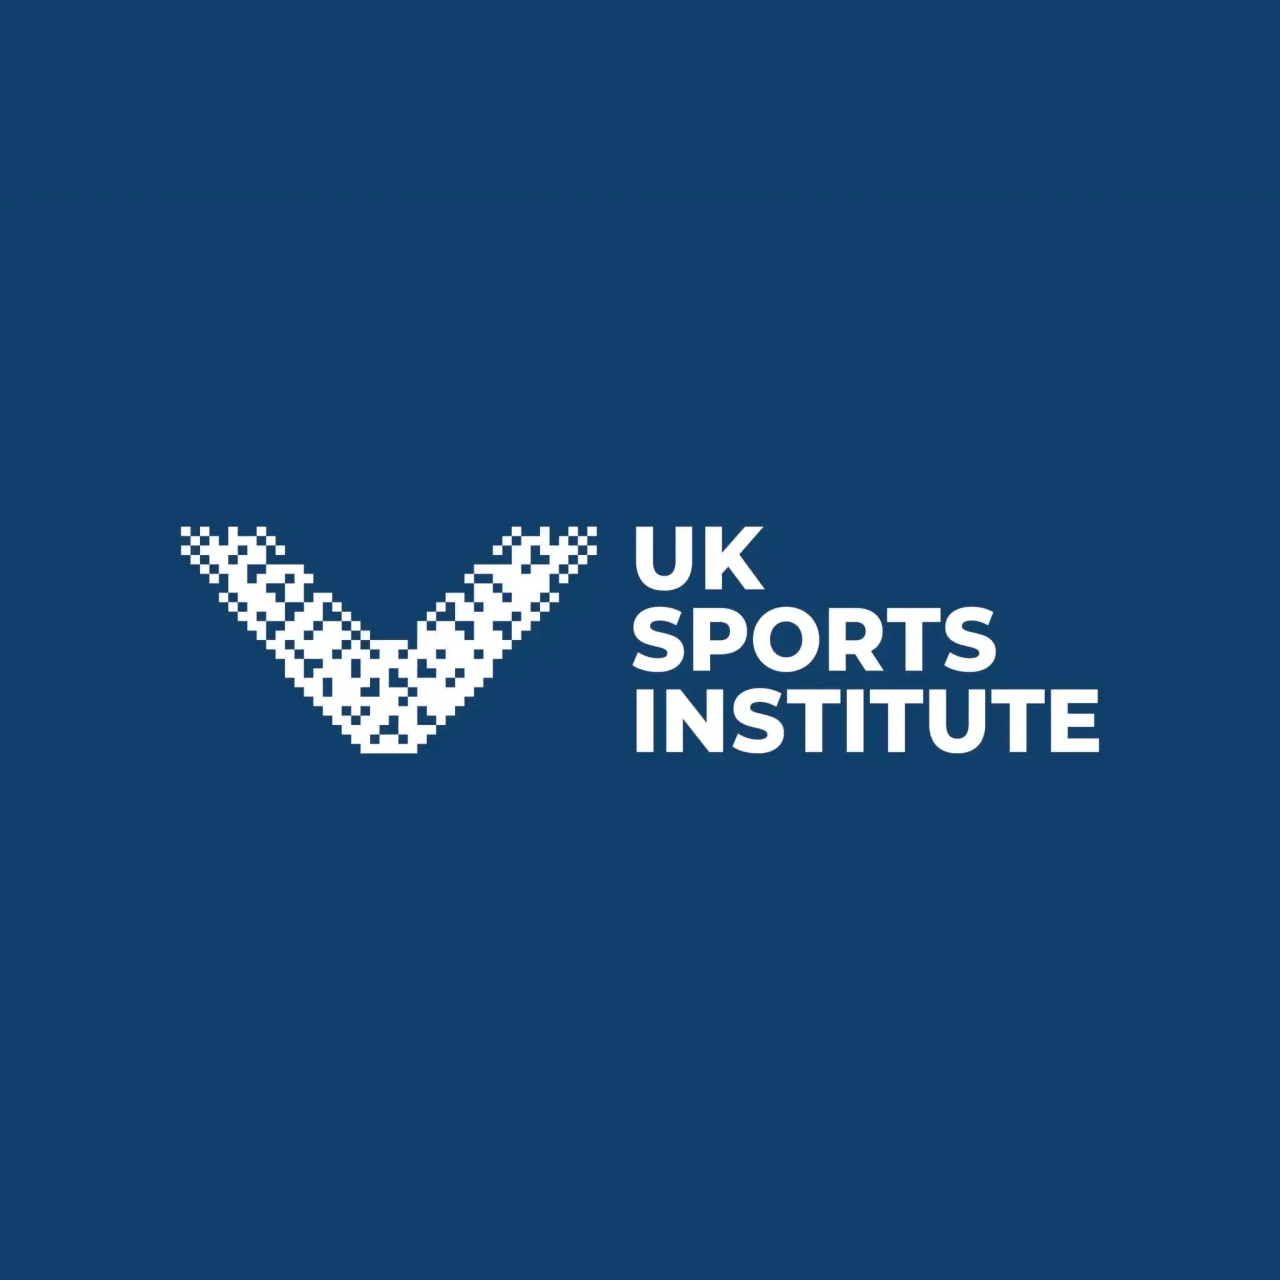 UK Sports Institute brand identity